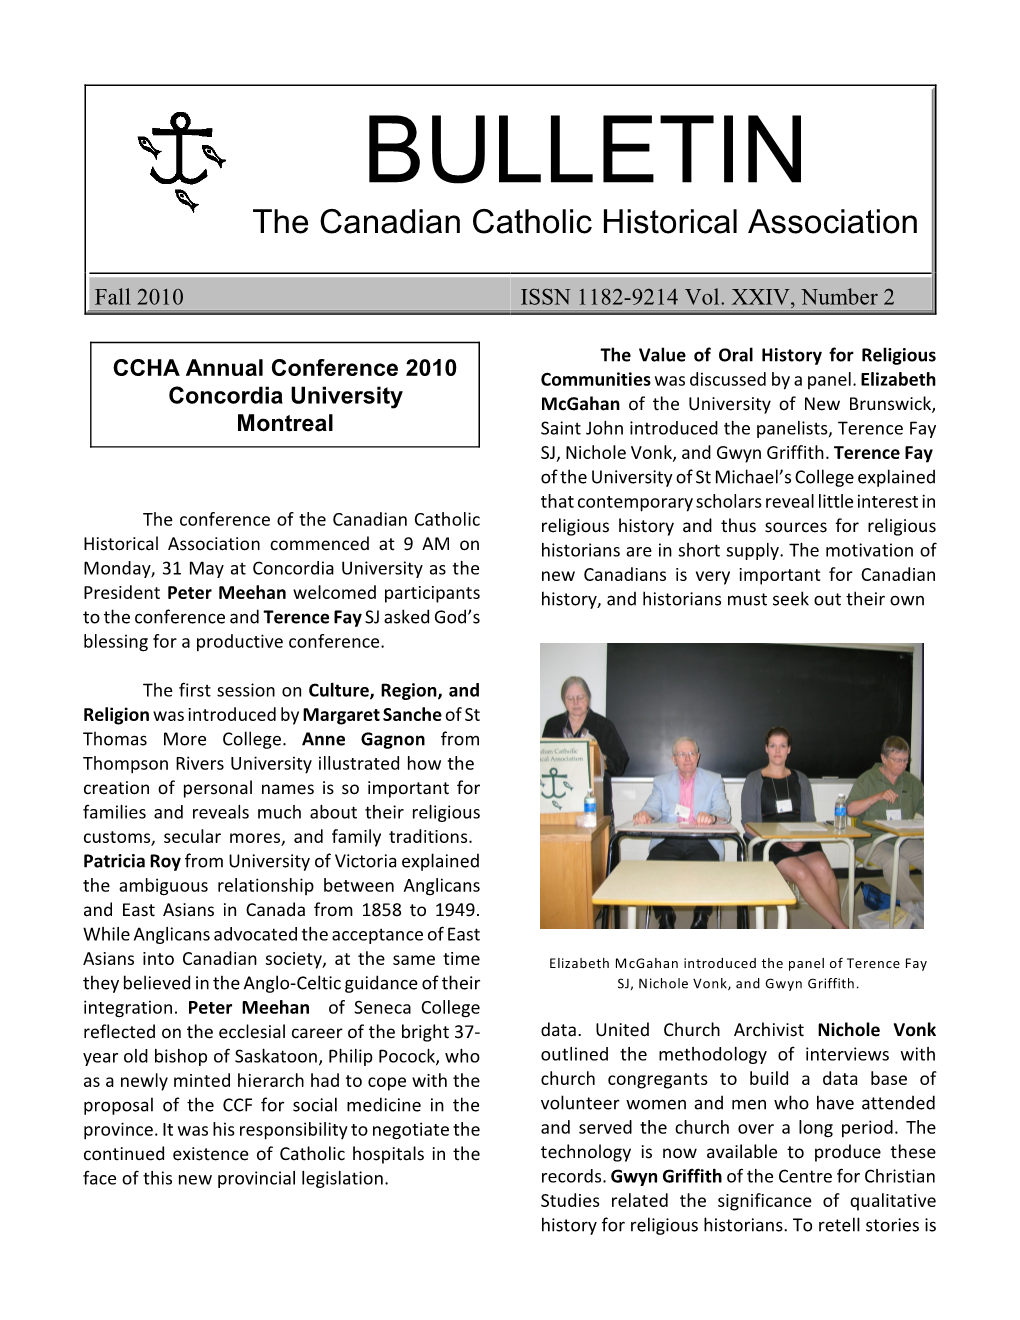 BULLETIN the Canadian Catholic Historical Association